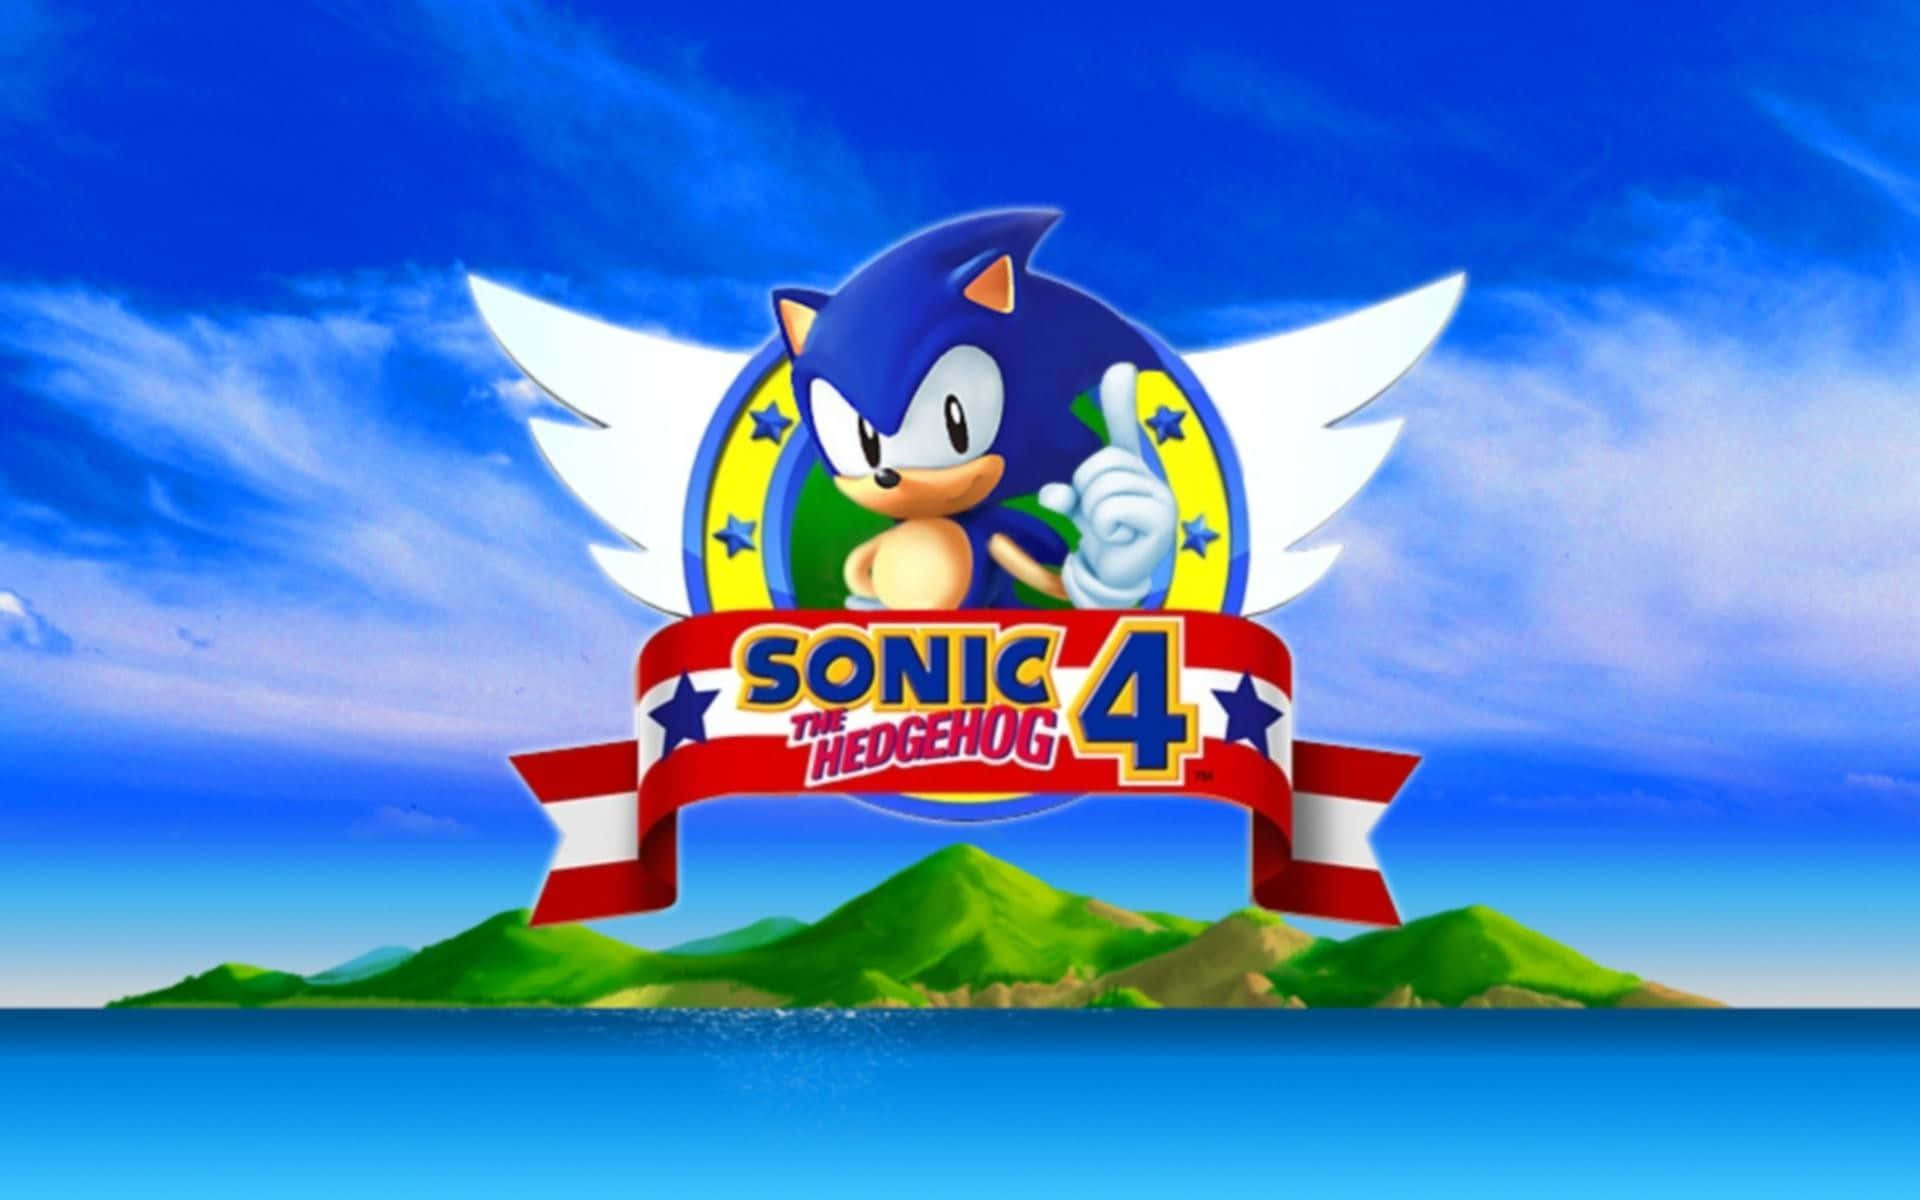 Sonic The Hedgehog in 4K Wallpaper